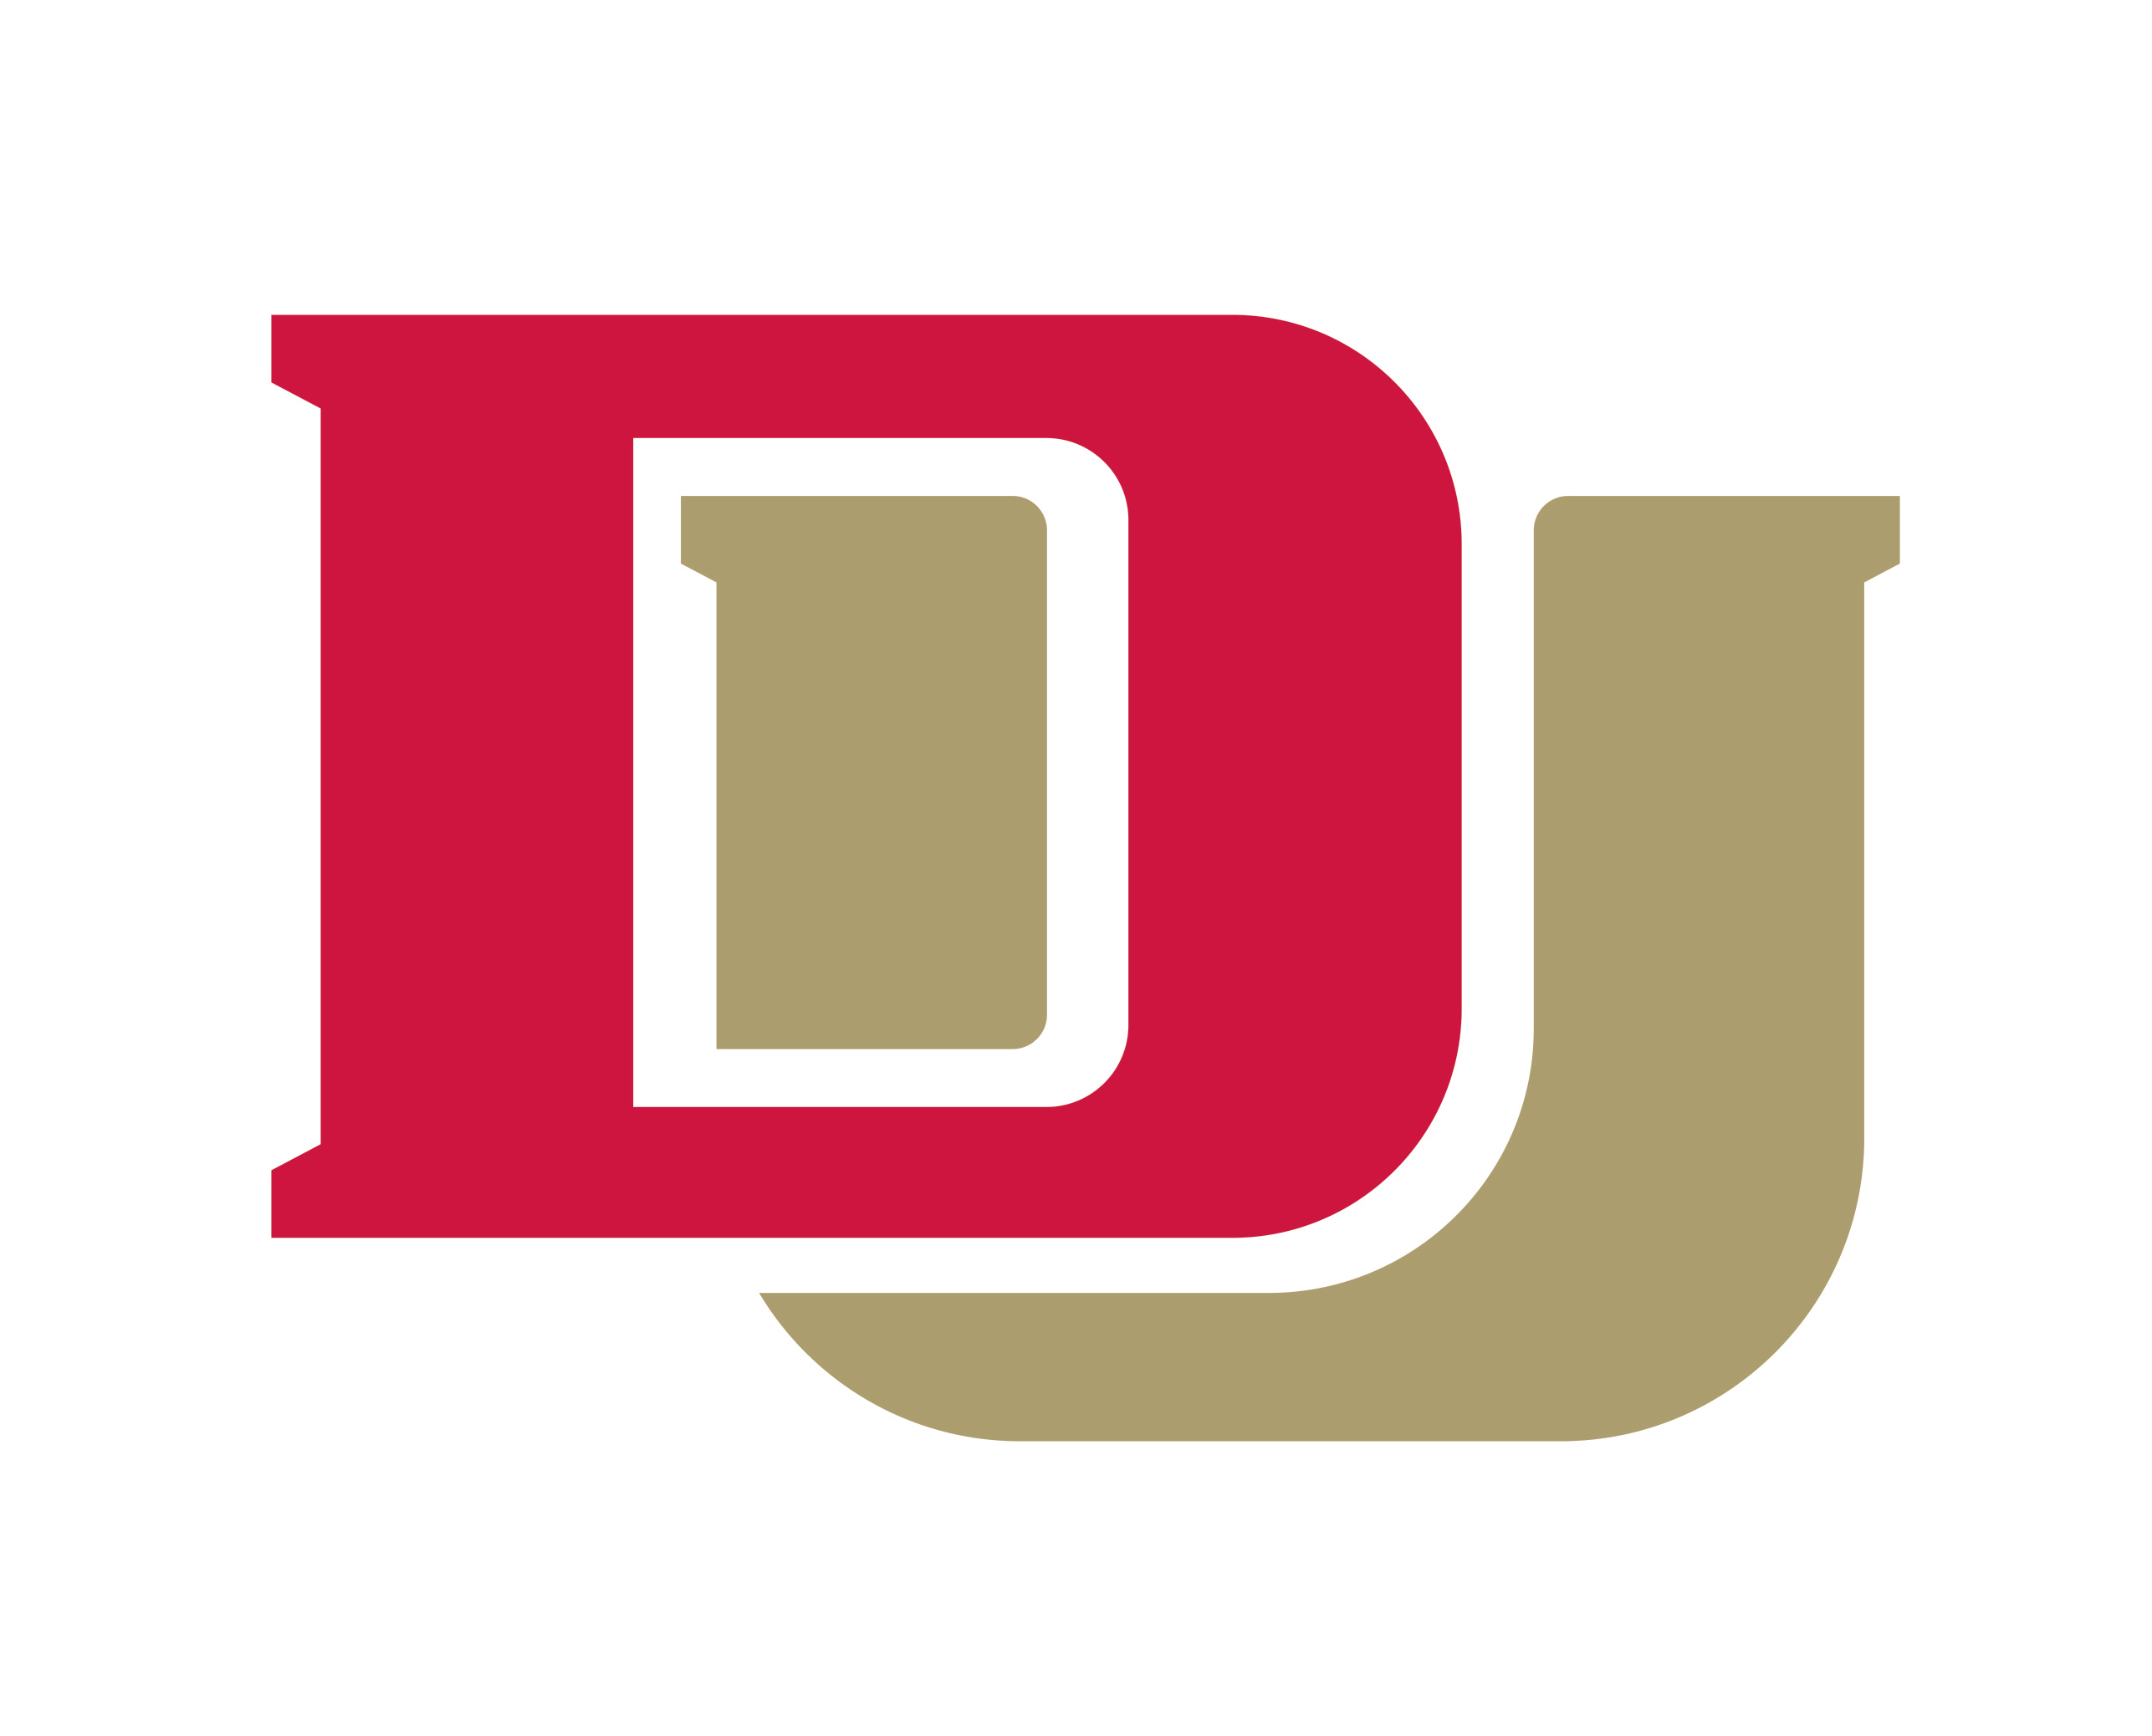 D and U interlocking letter logo